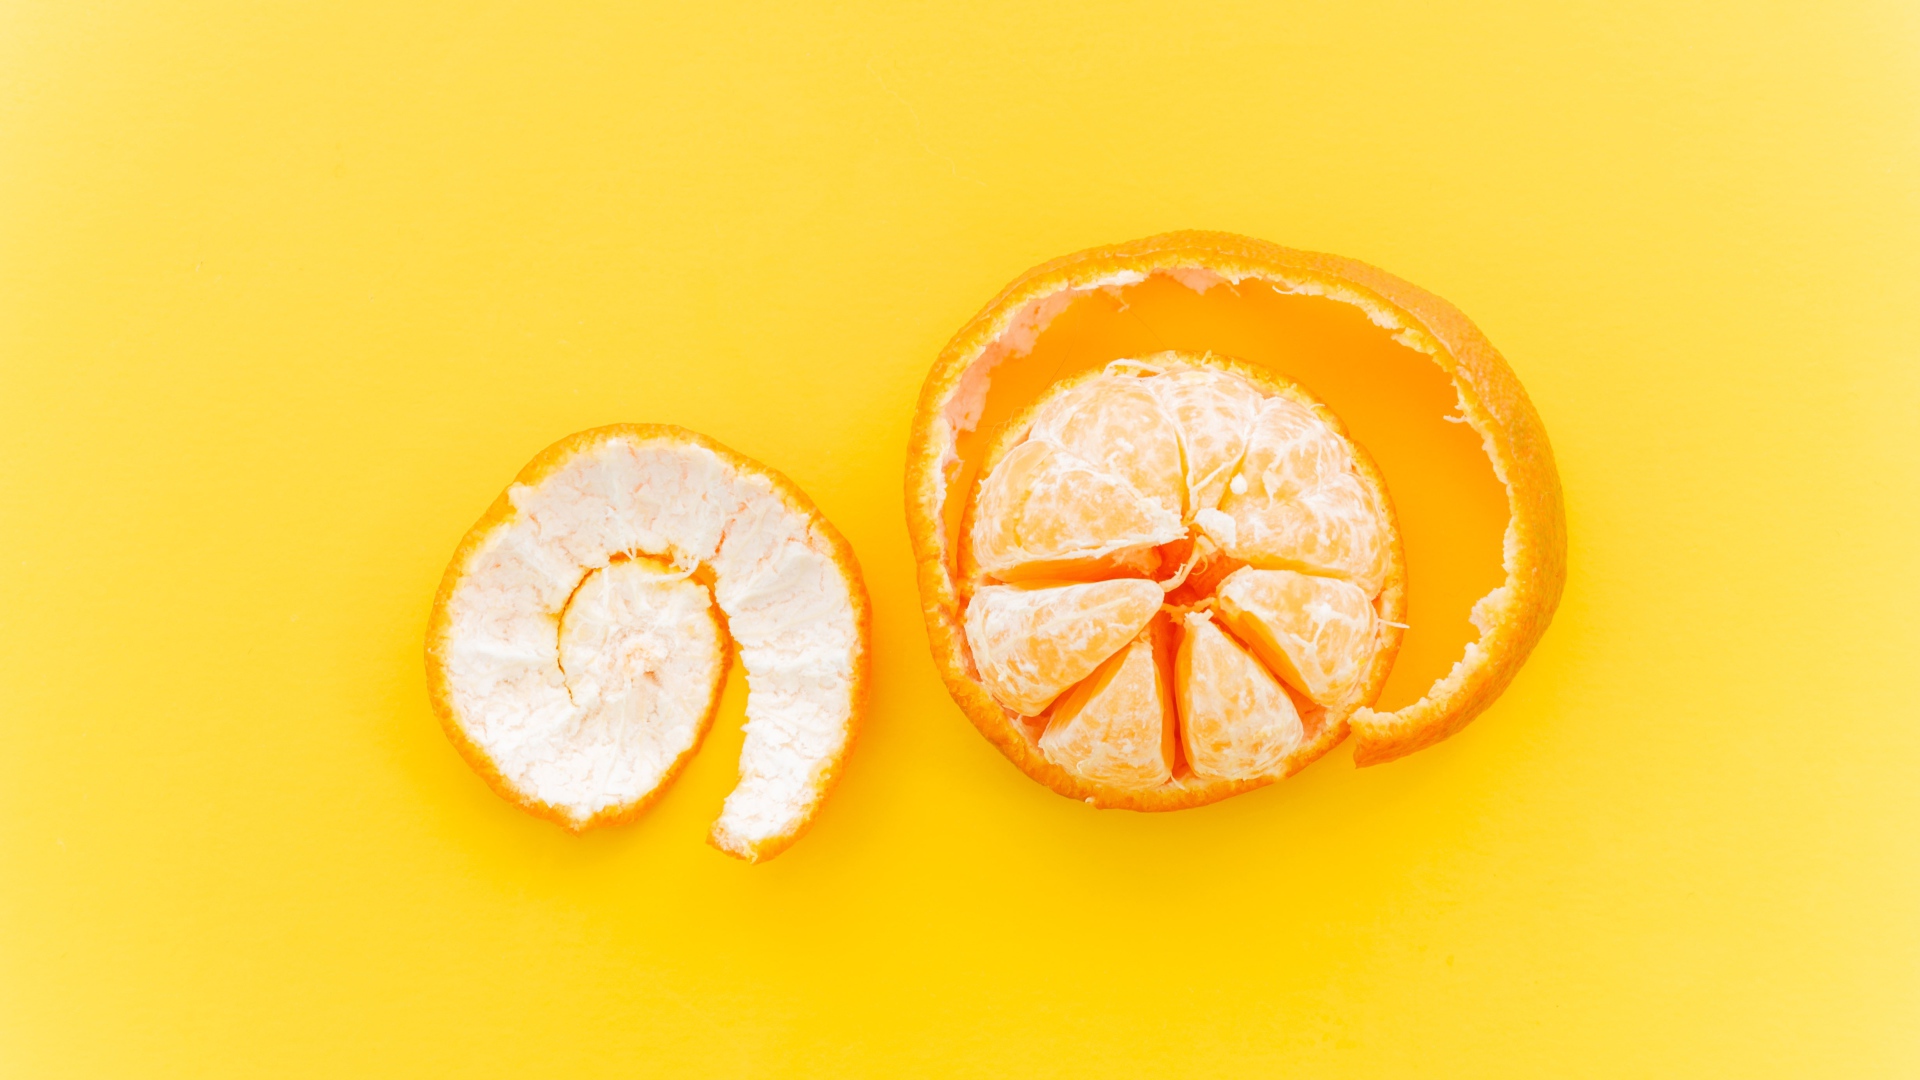 Peeled tangerine with peel on yellow background